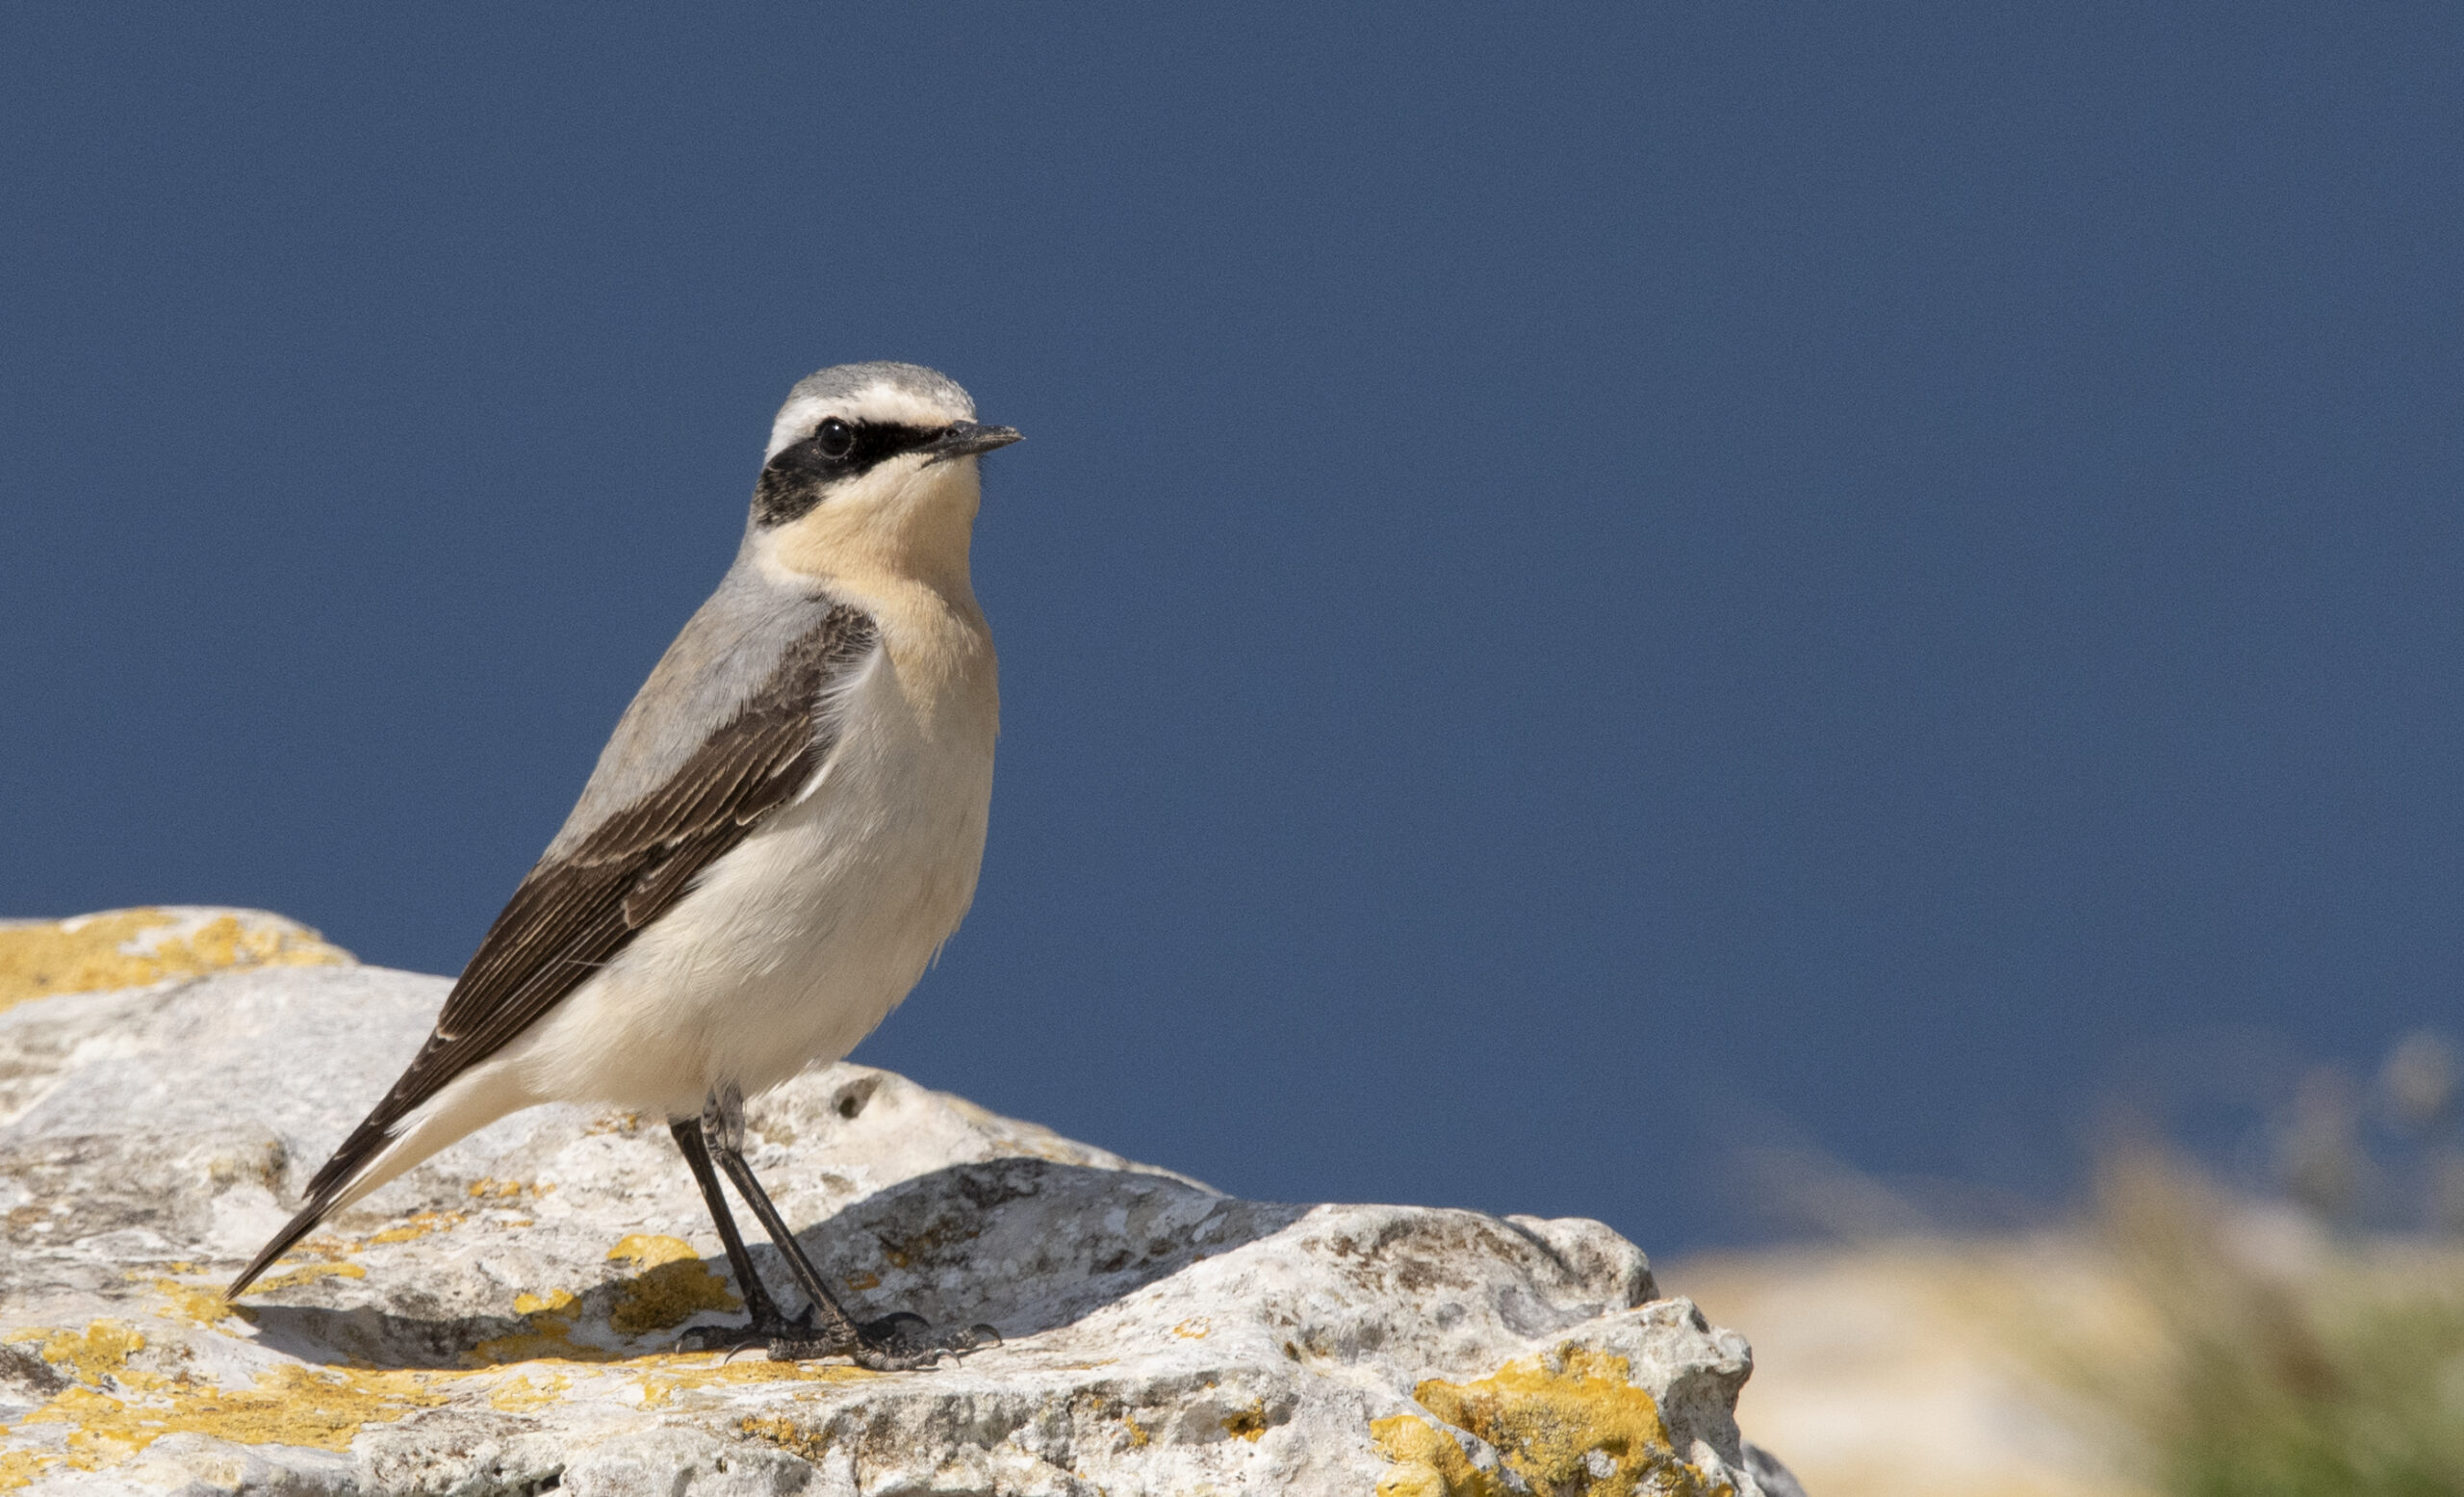 Birds of Malta photo competition - CLOSED - BirdLife Malta